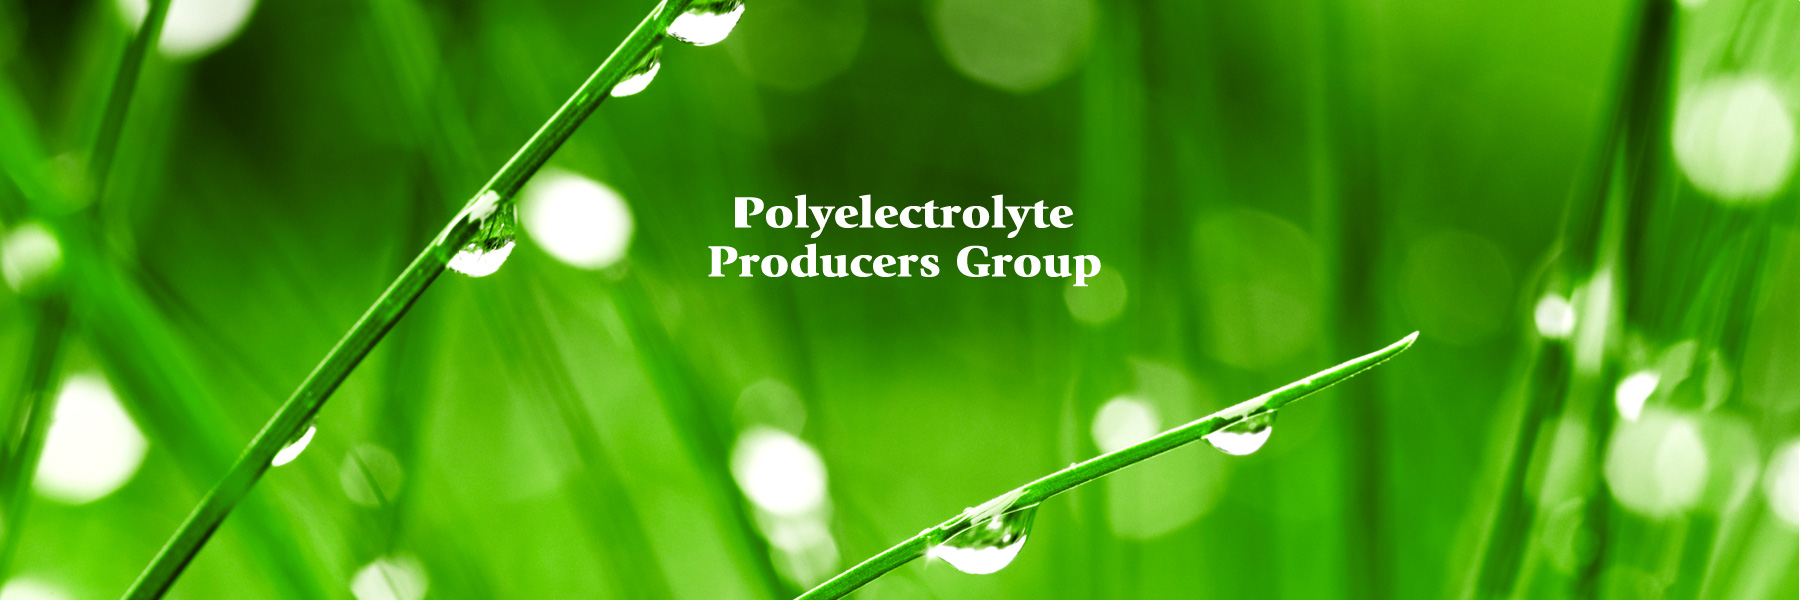 Polyelectrolyte Producers Group